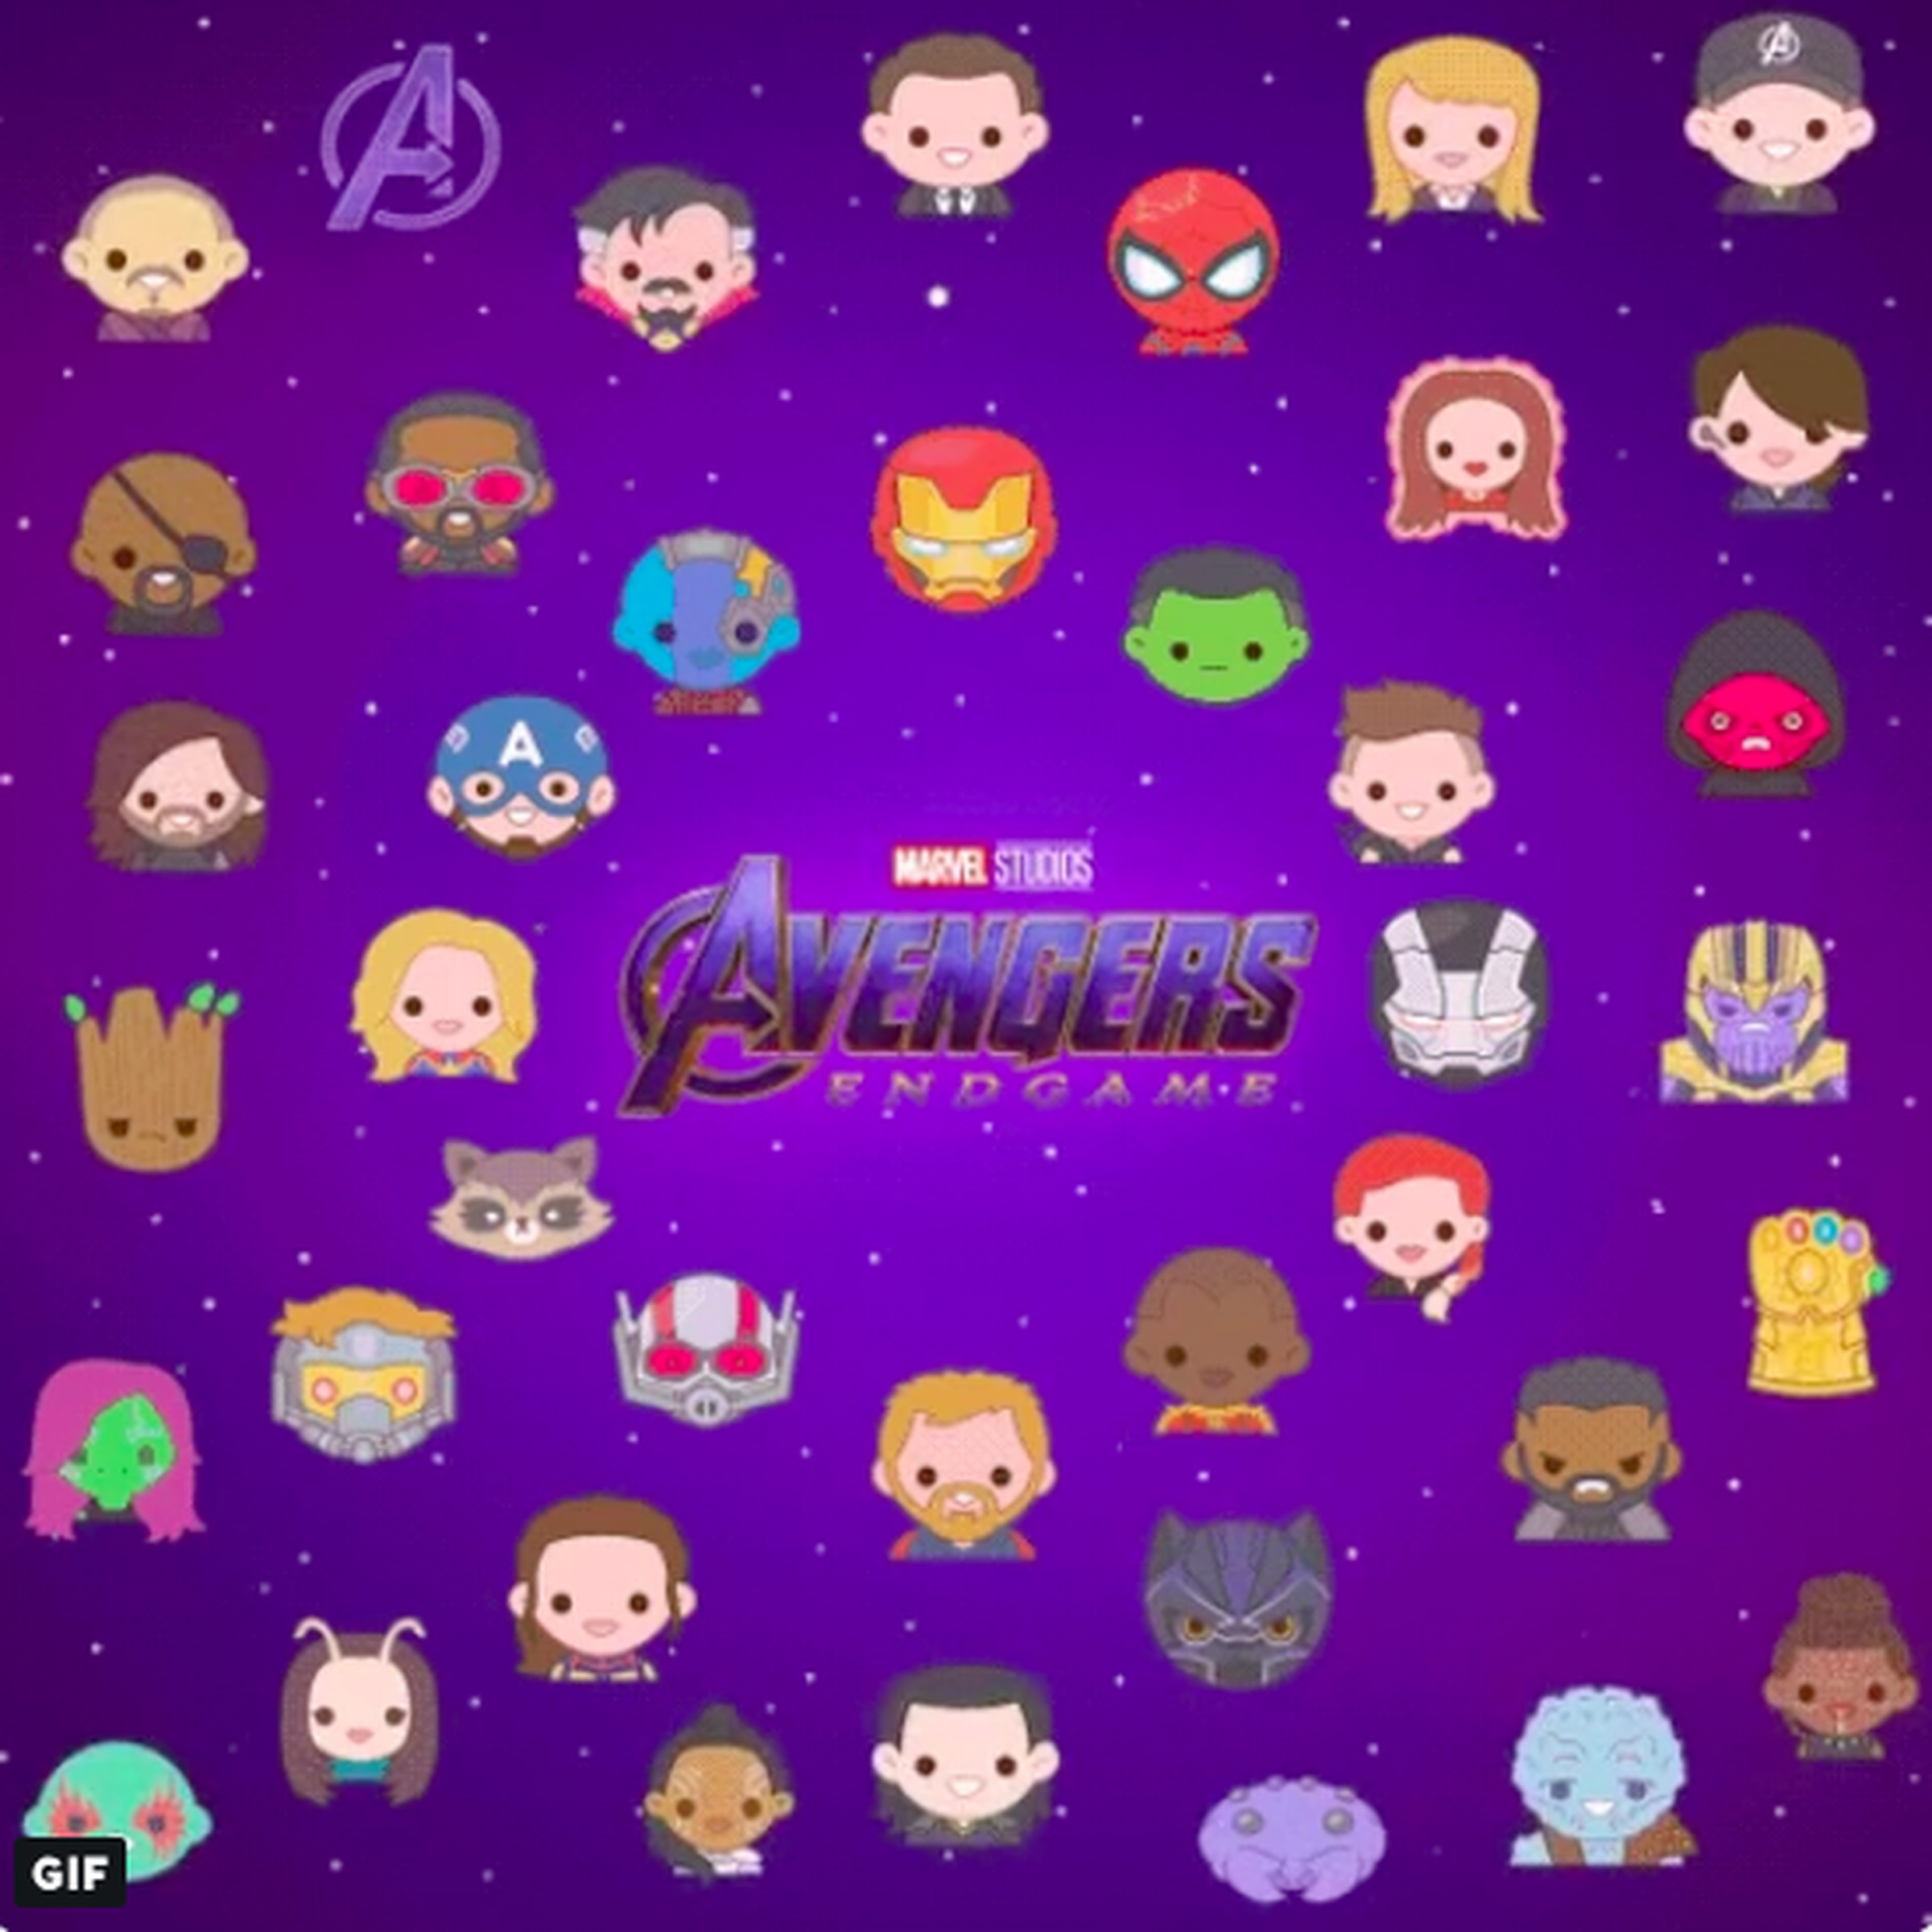 The various Avengers emoji.